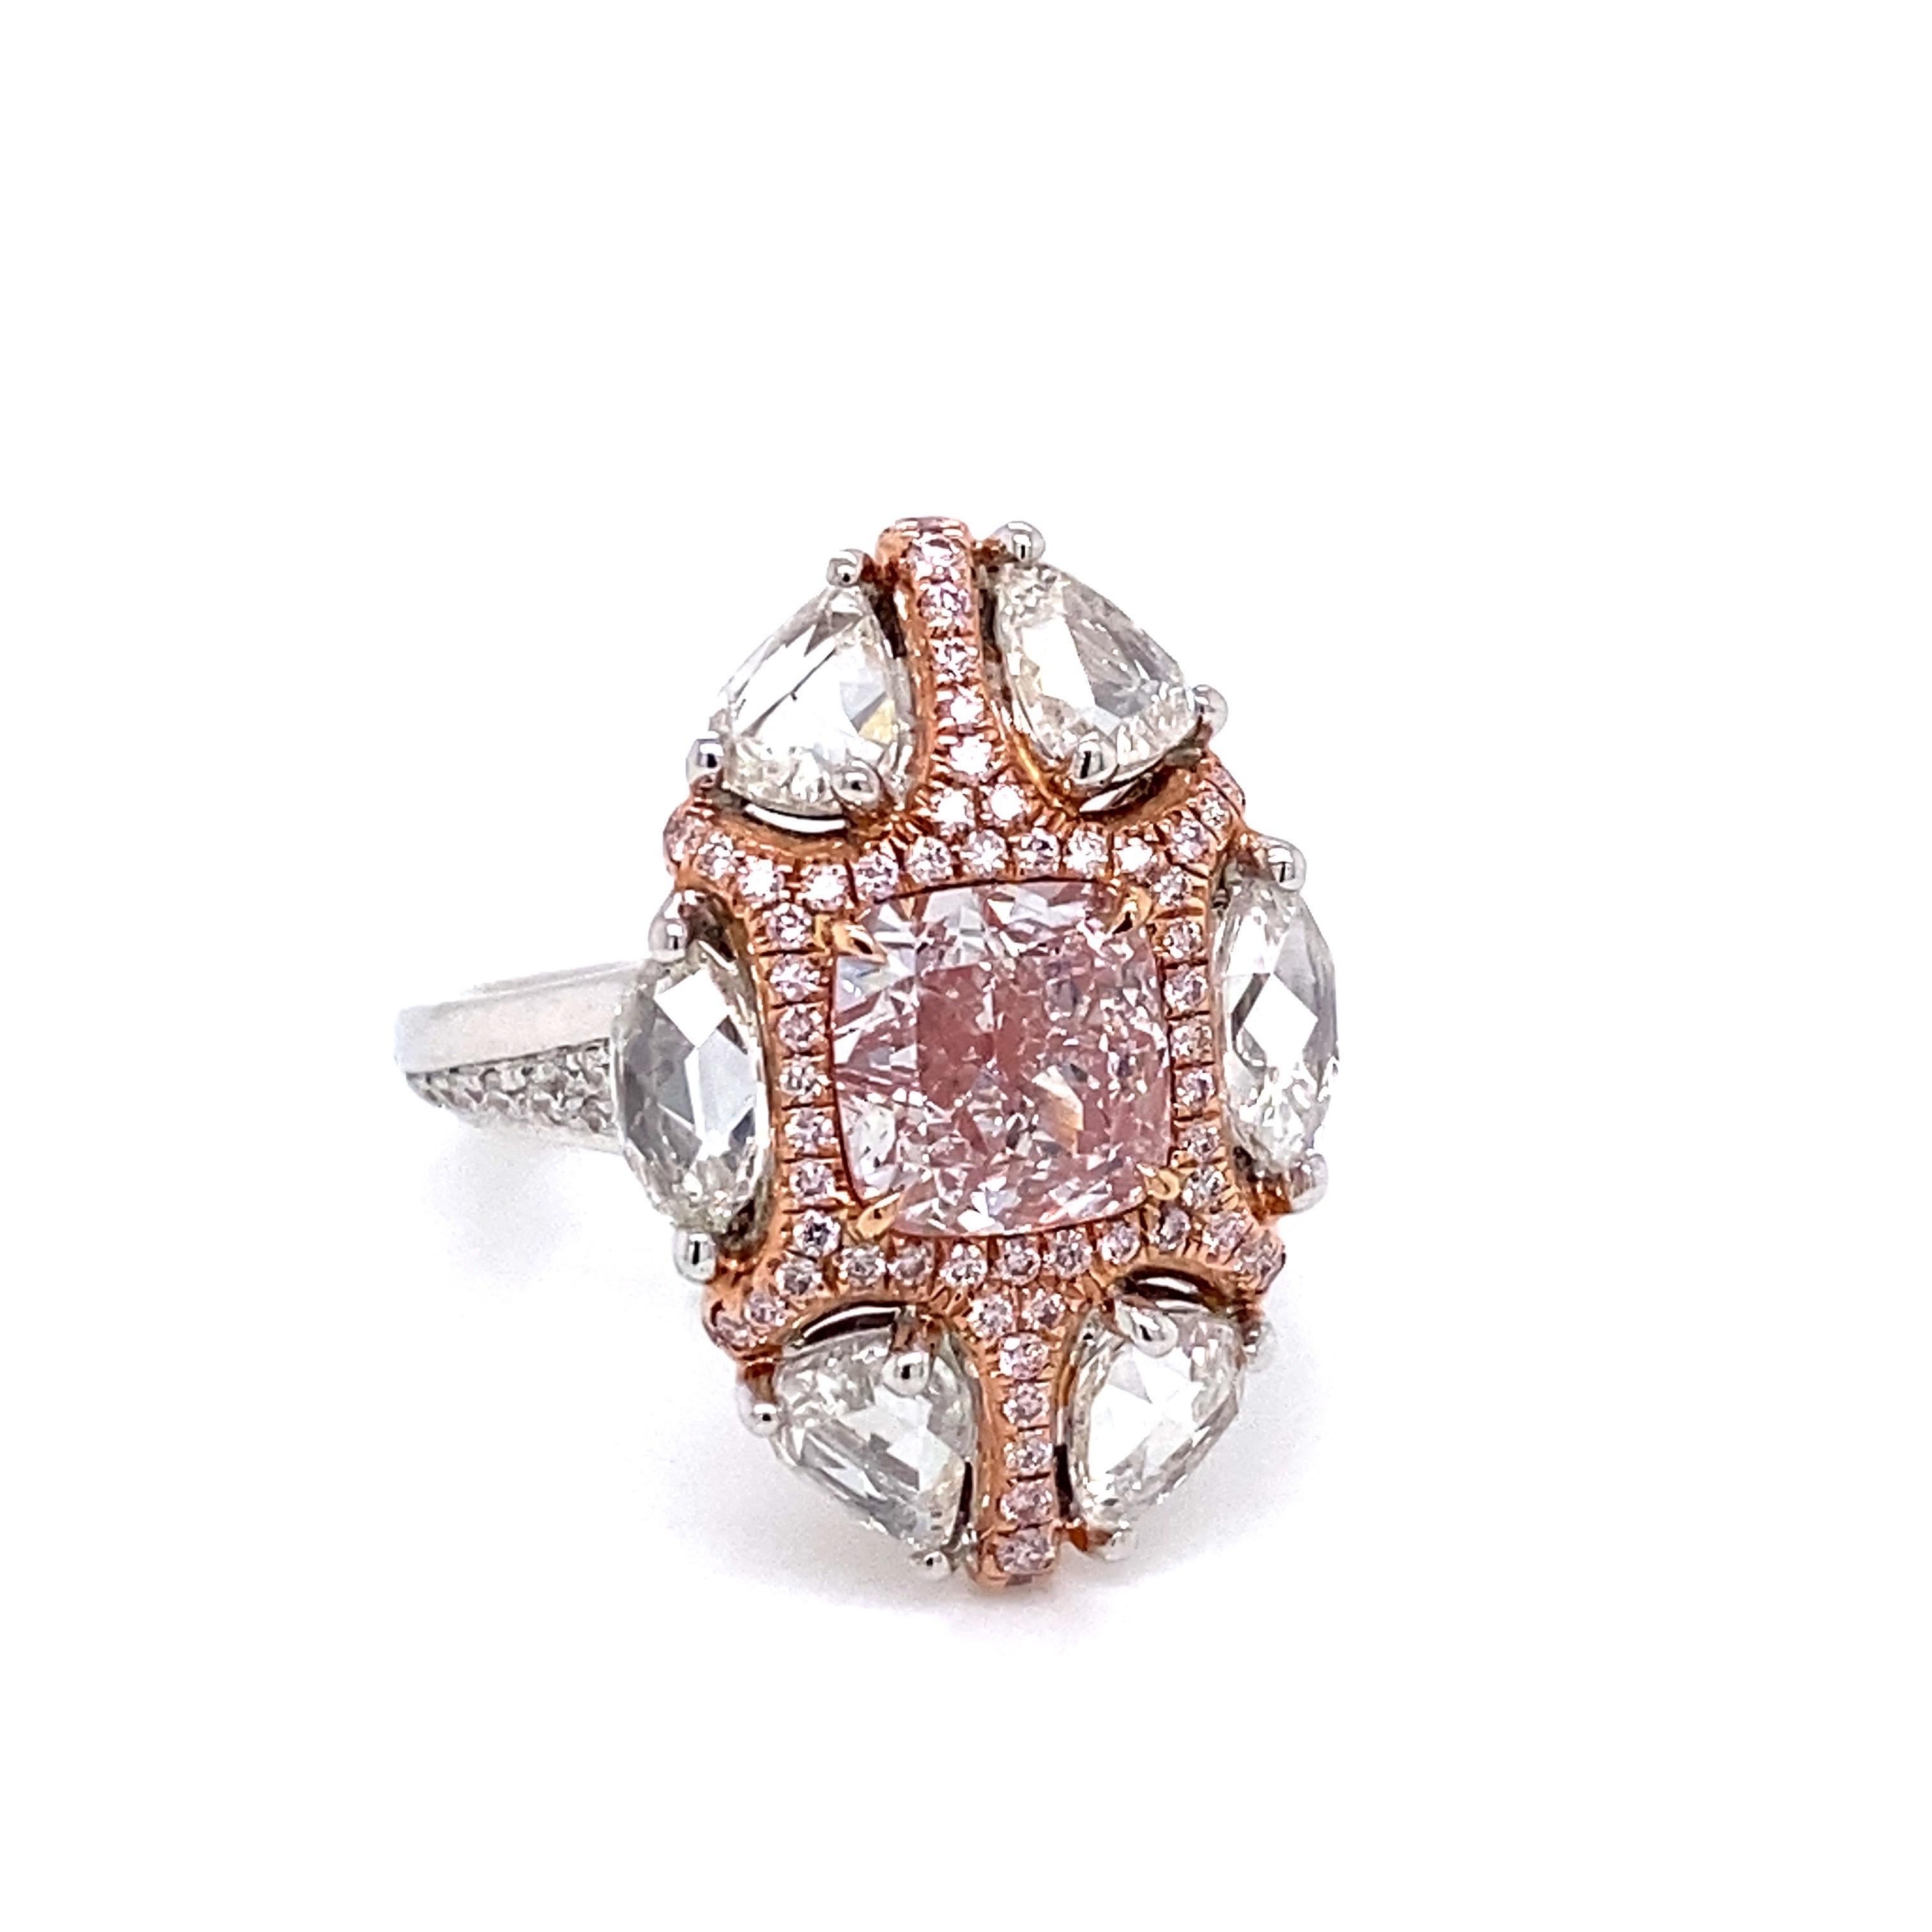 Radiant Cut Emilio Jewelry GIA Certified 4.00 Carat Pinkish Diamond Ring